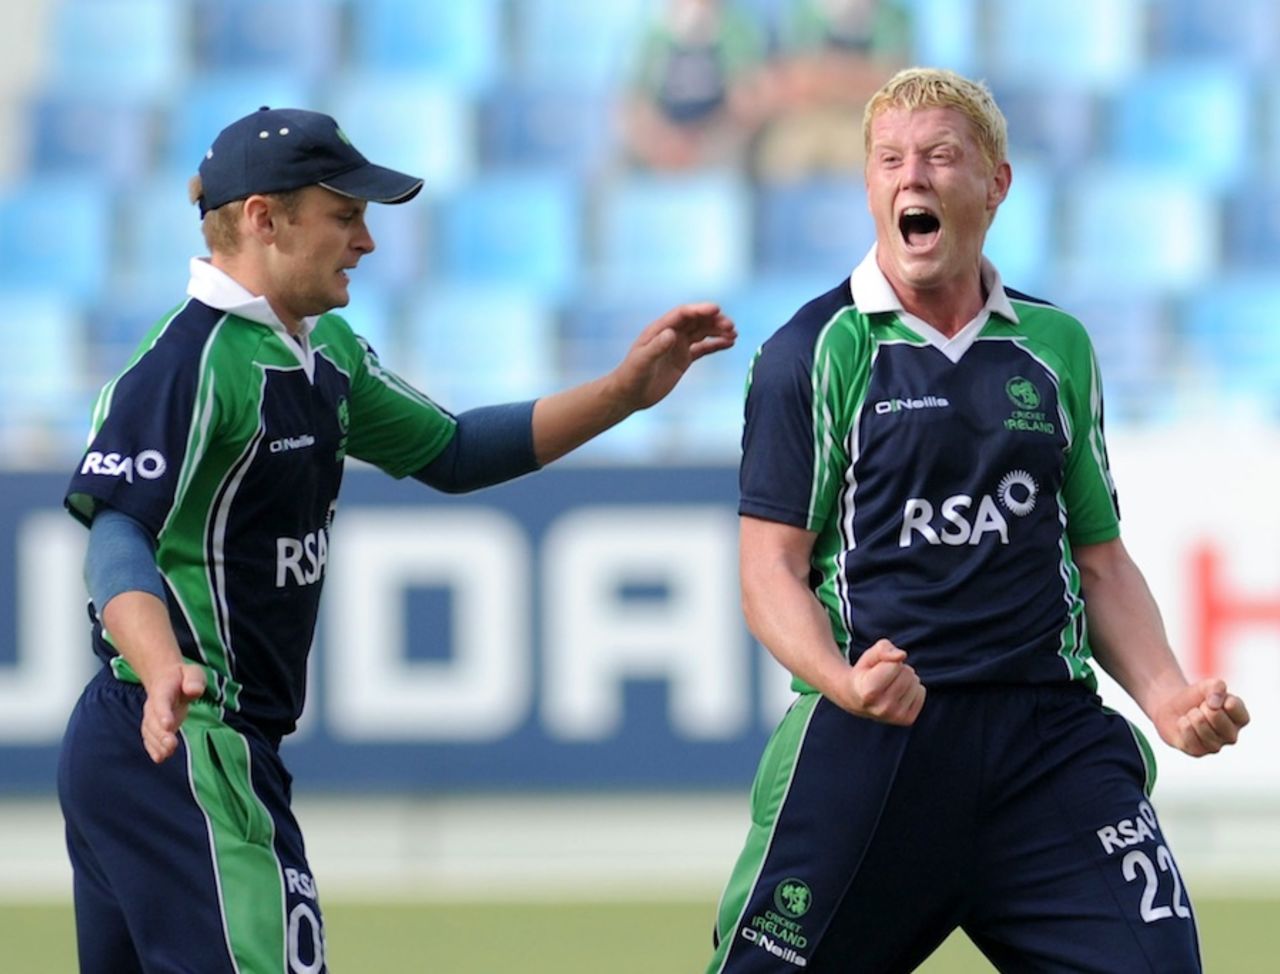 Kevin O'Brien and William Porterfield celebrate a wicket, Ireland v Scotland, ICC World Twenty20 Qualifier, Dubai, March 18, 2012